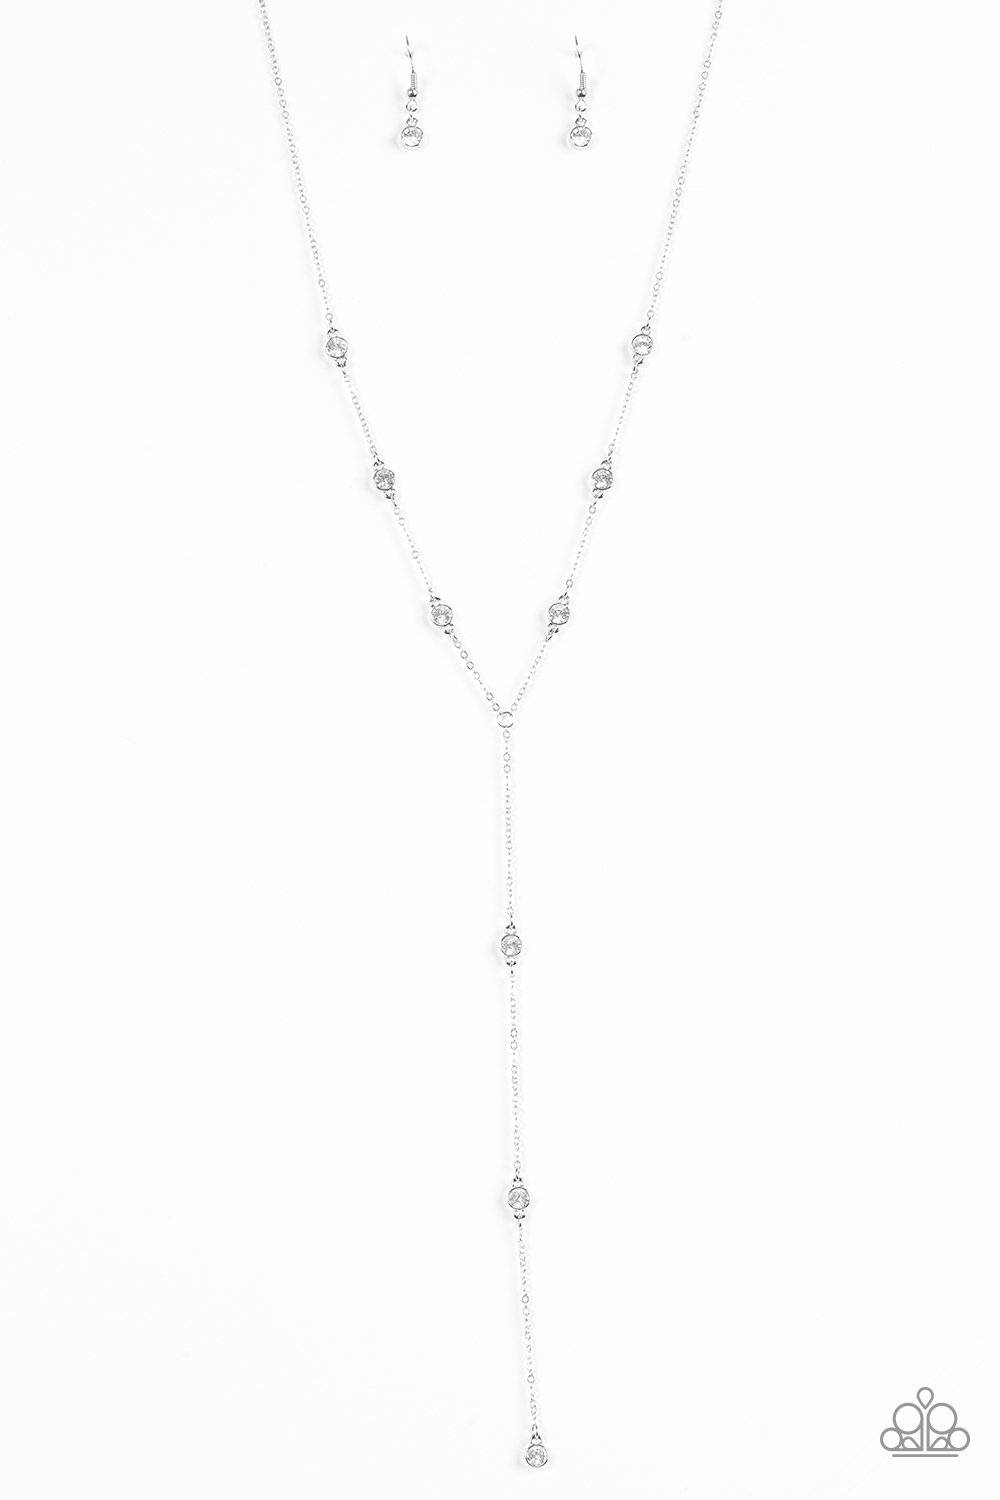 STARLIGHT The Way White Necklace - Paparazzi Accessories - GlaMarous Titi Jewels